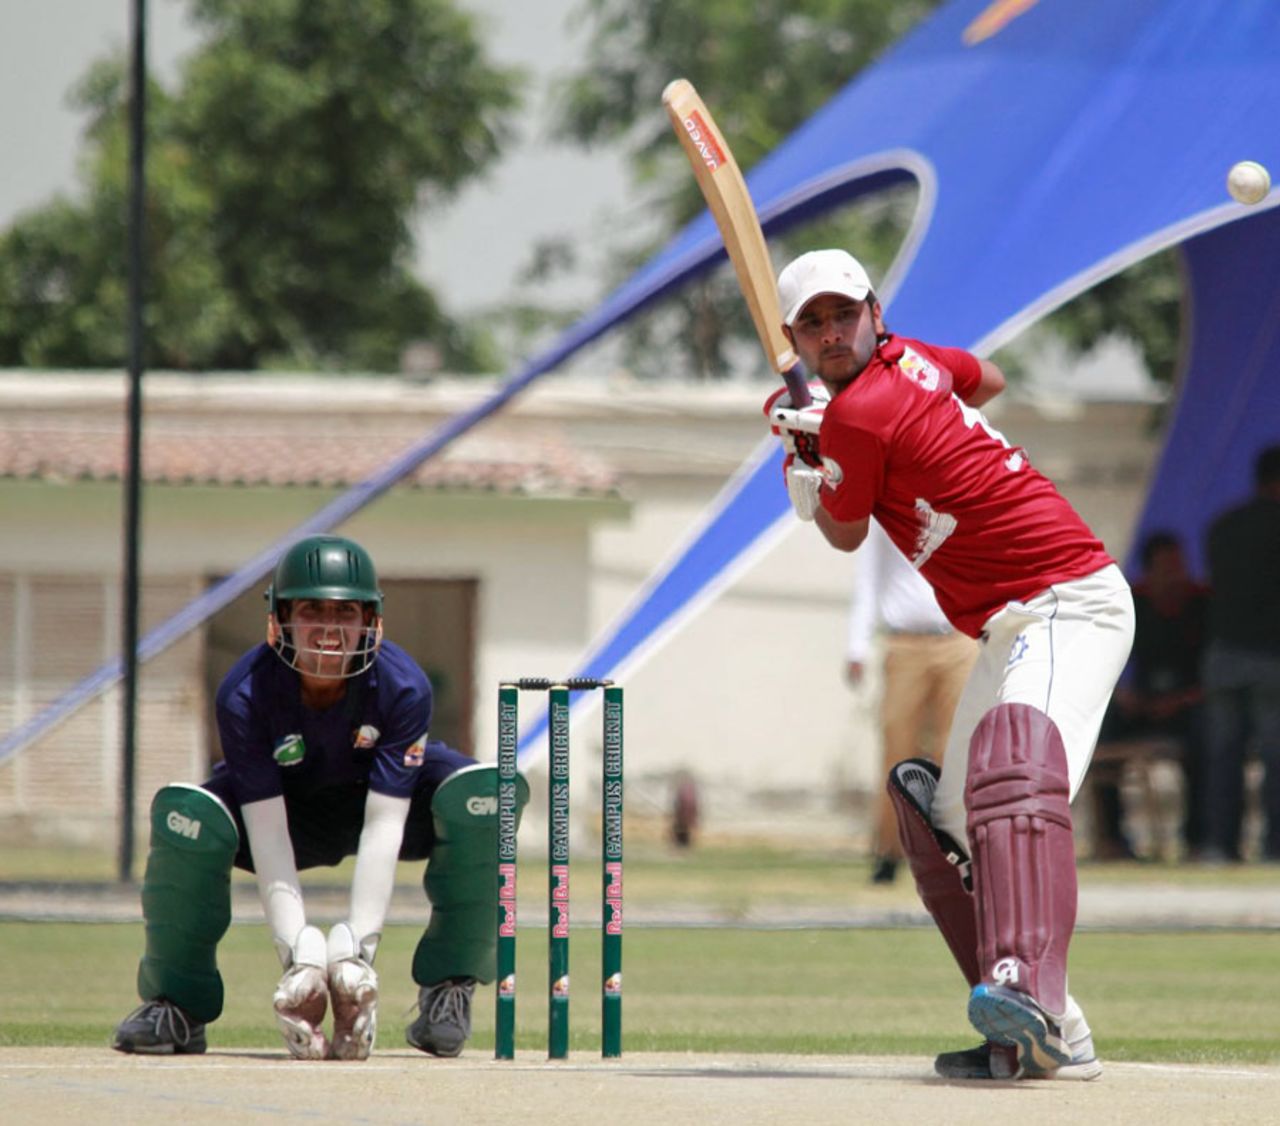 University of Sargodha chased down the target in 16.2 overs, Punjab University Lahore v University of Sargodha, Red Bull Campus Cricket National Finals (Pakistan), 2014, Karachi, April 7, 2014